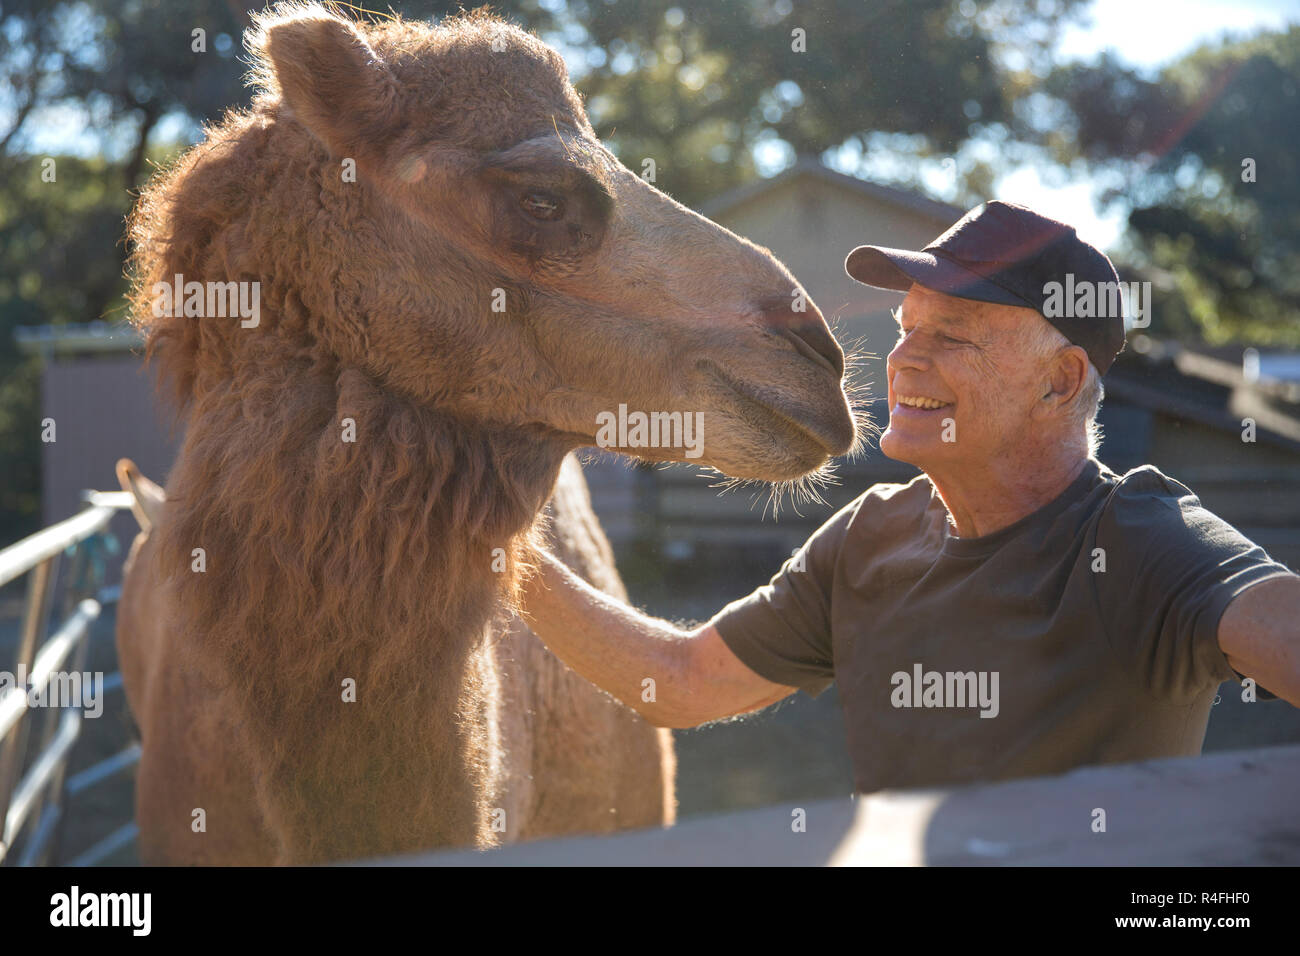 Senior Uomo & Camel sorridente ad ogni altro Foto Stock